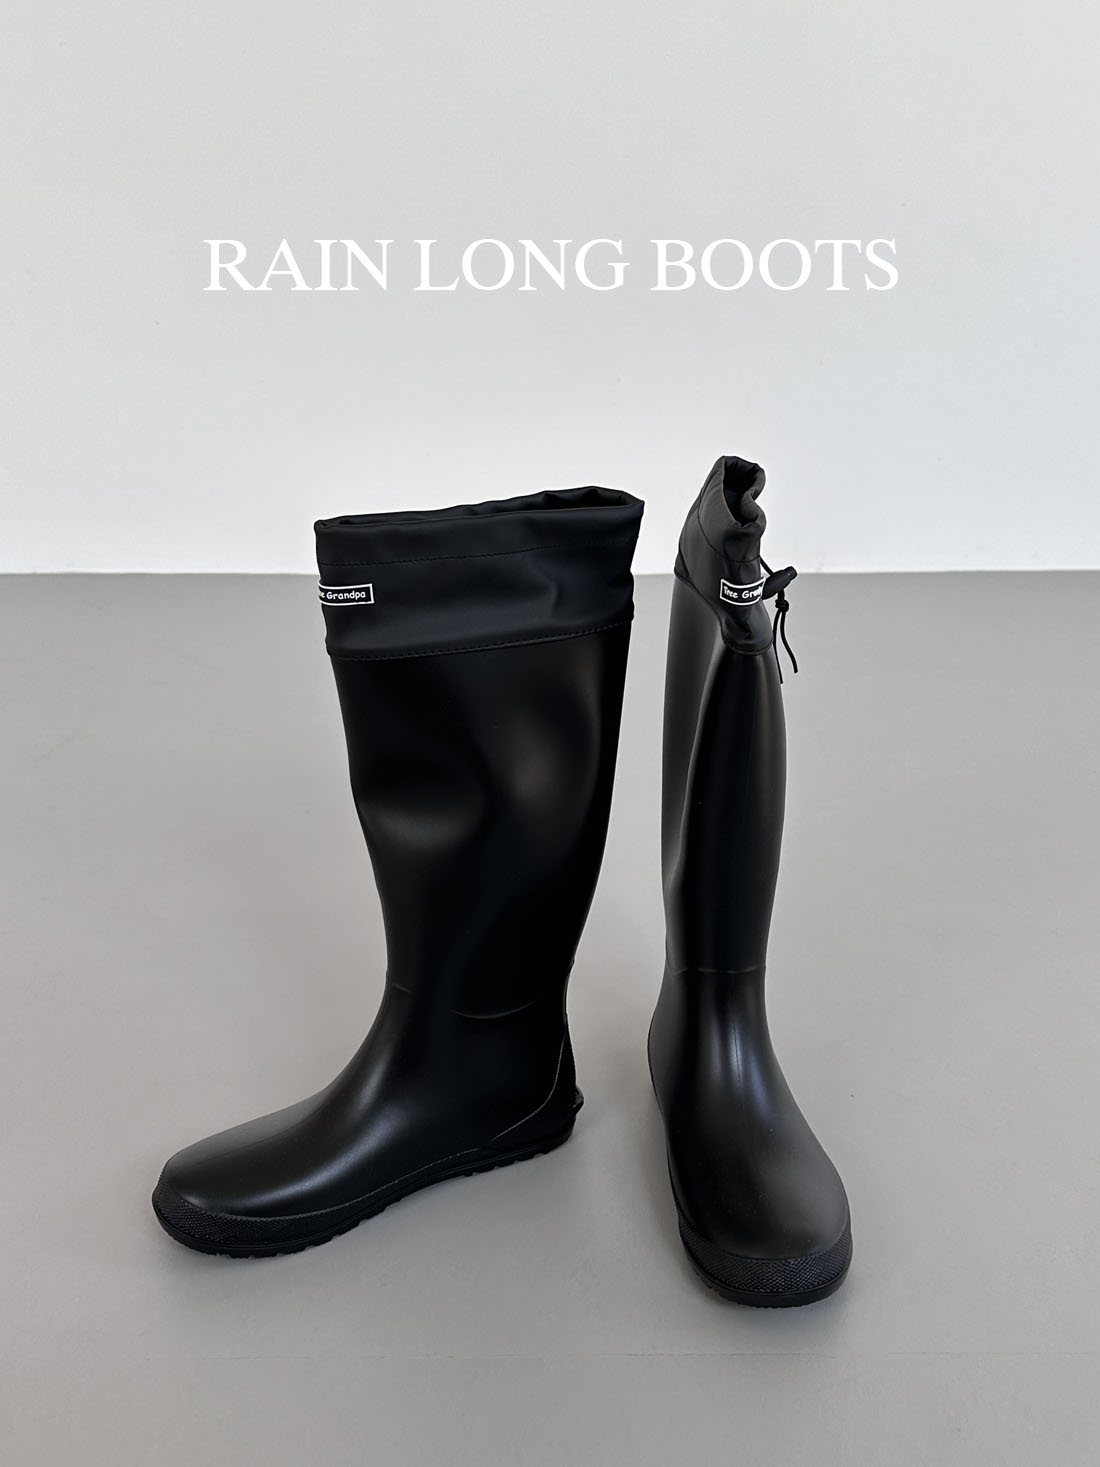 rain long boots